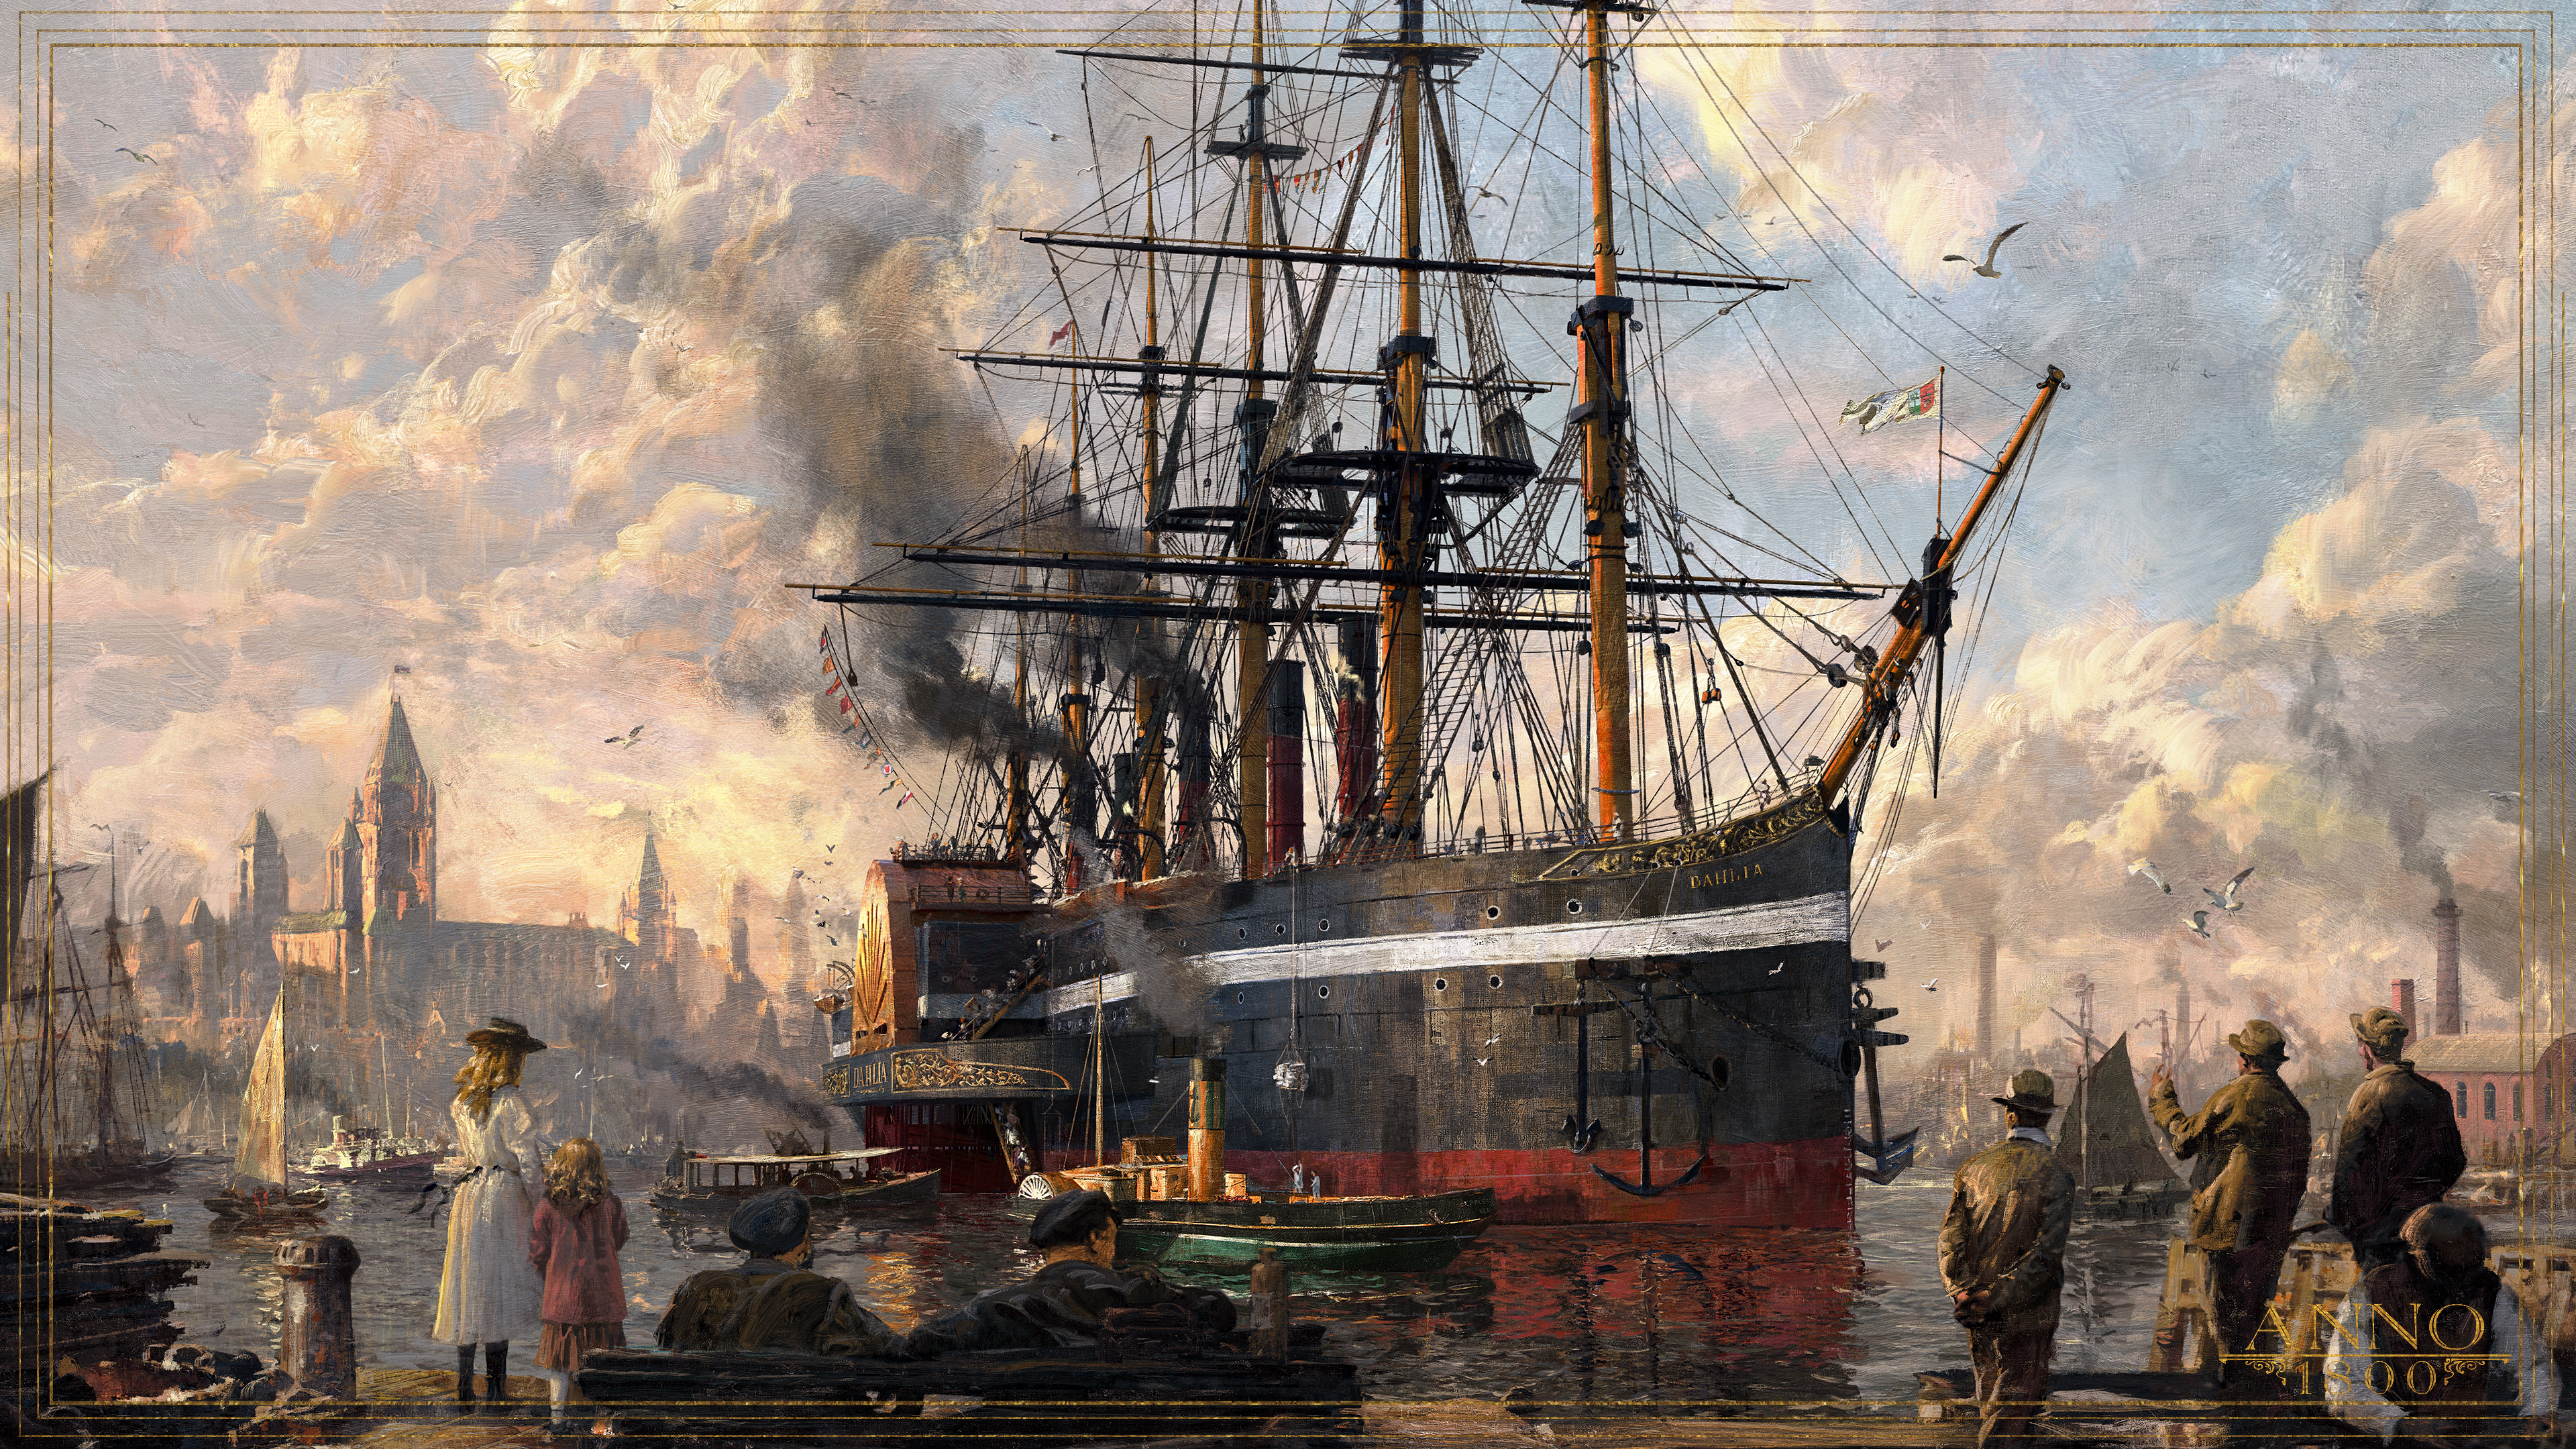 General 3840x2160 Anno 1800 1800s digital art concept art ship harbor steam ship pier London artwork Ubisoft